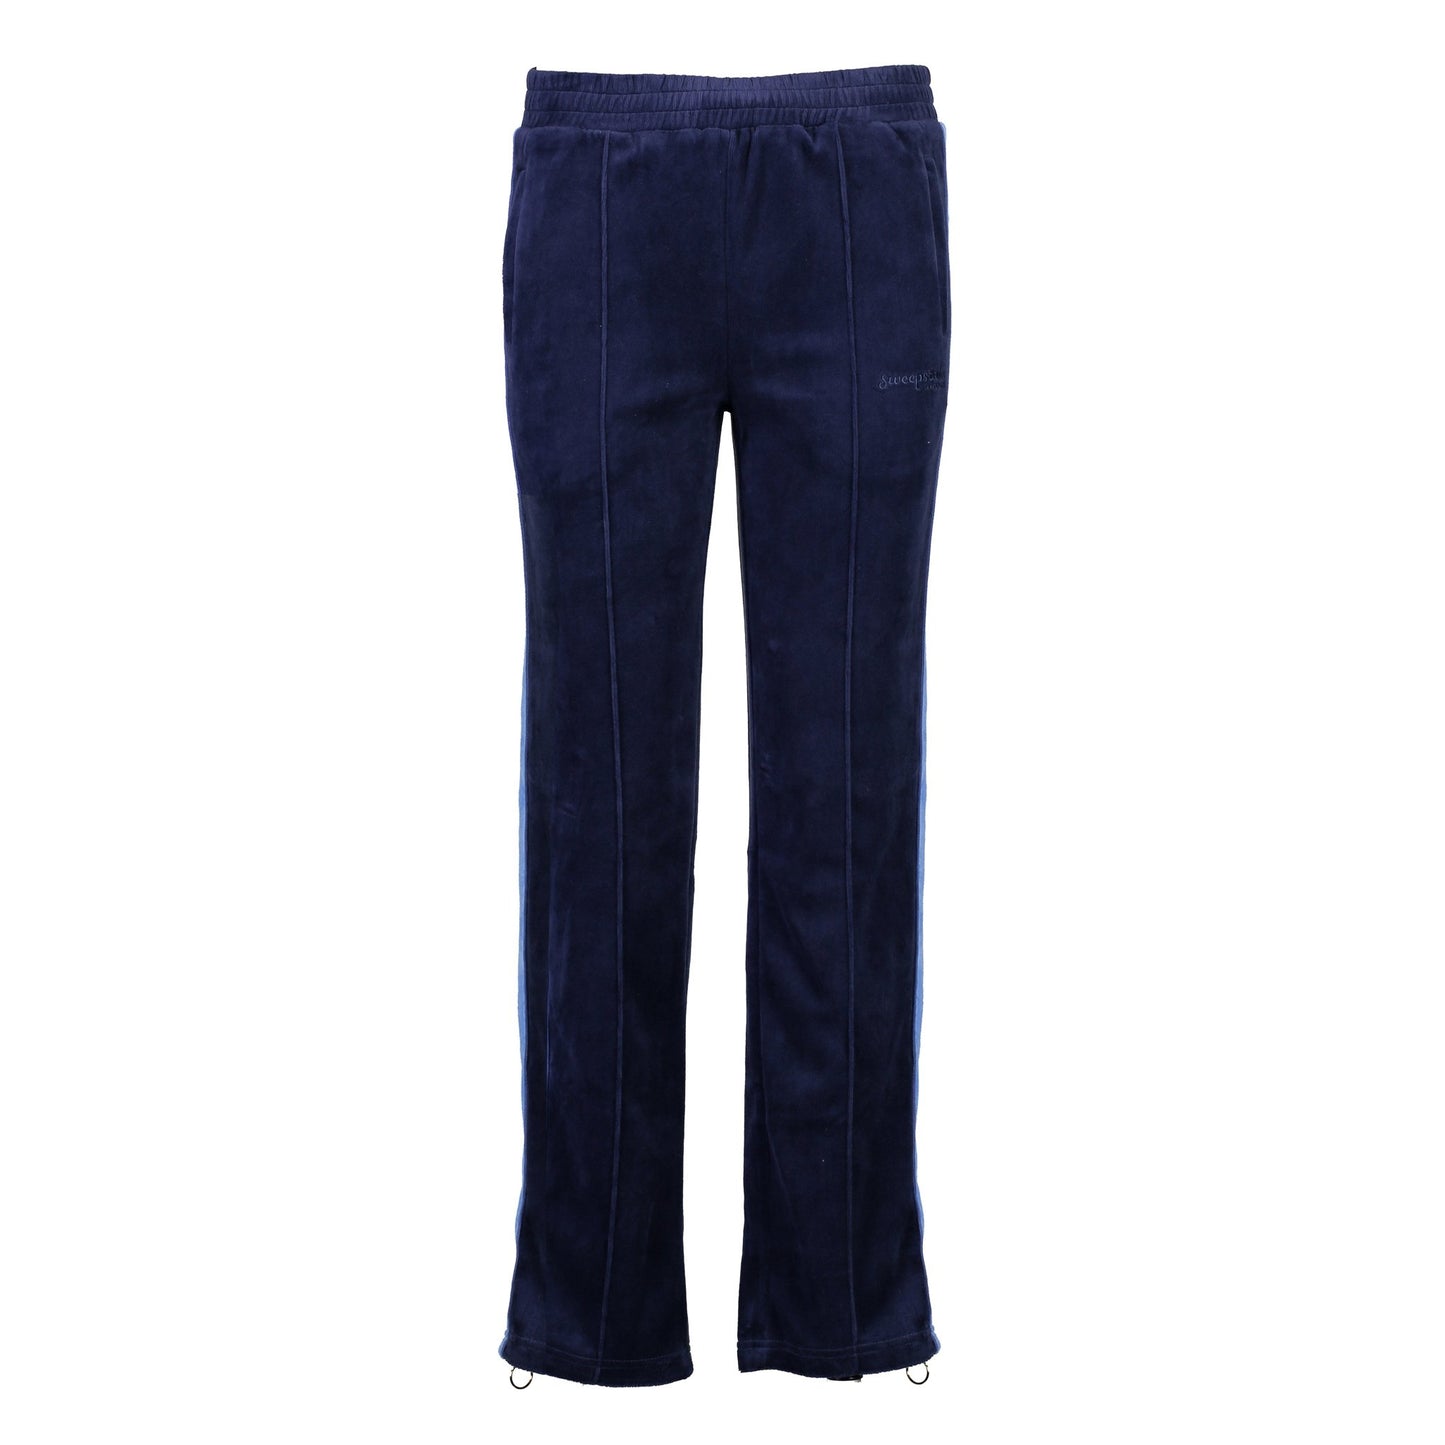 Velour Jogging Pants (Ink/Cornflower Blue) - Sweepstake Winners™